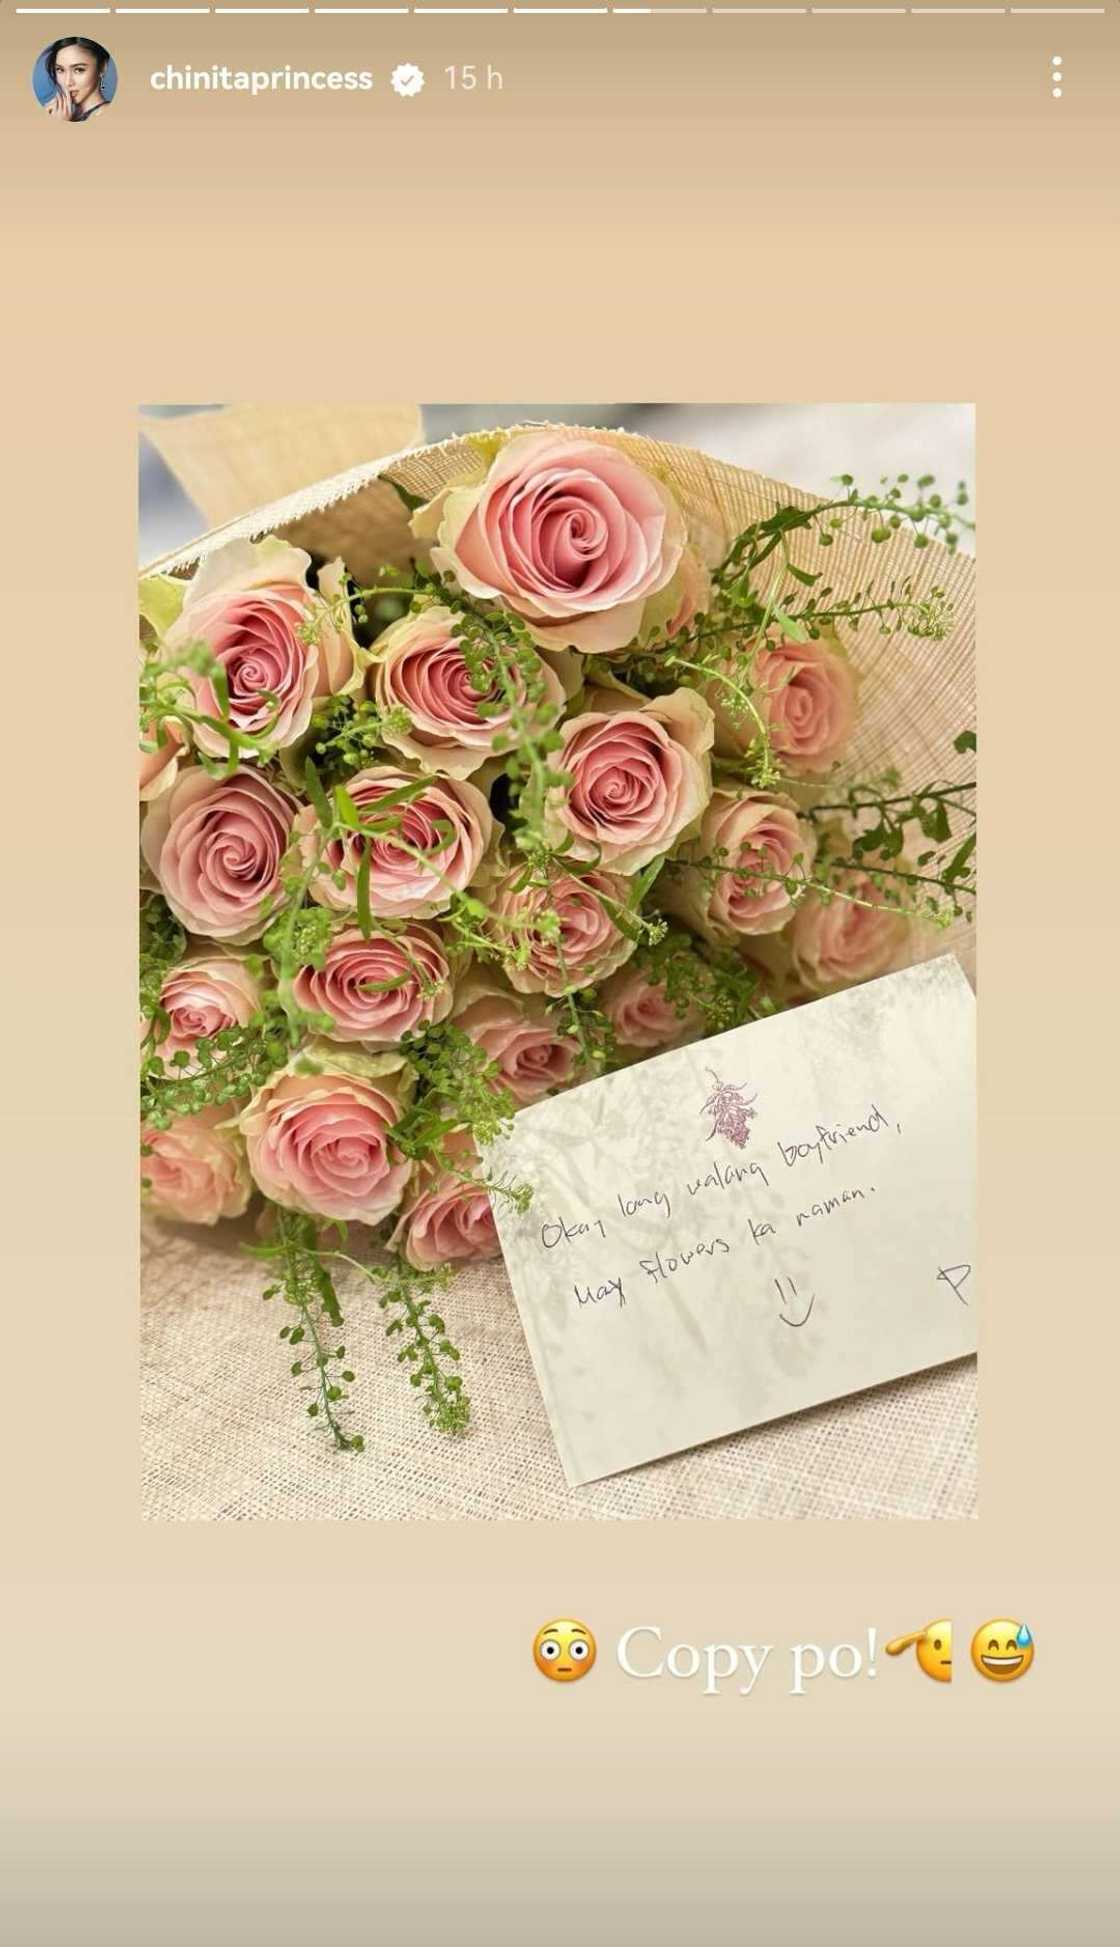 Kim Chiu, ibinida ang flowers na padala ni 'P' sa kanya sa social media